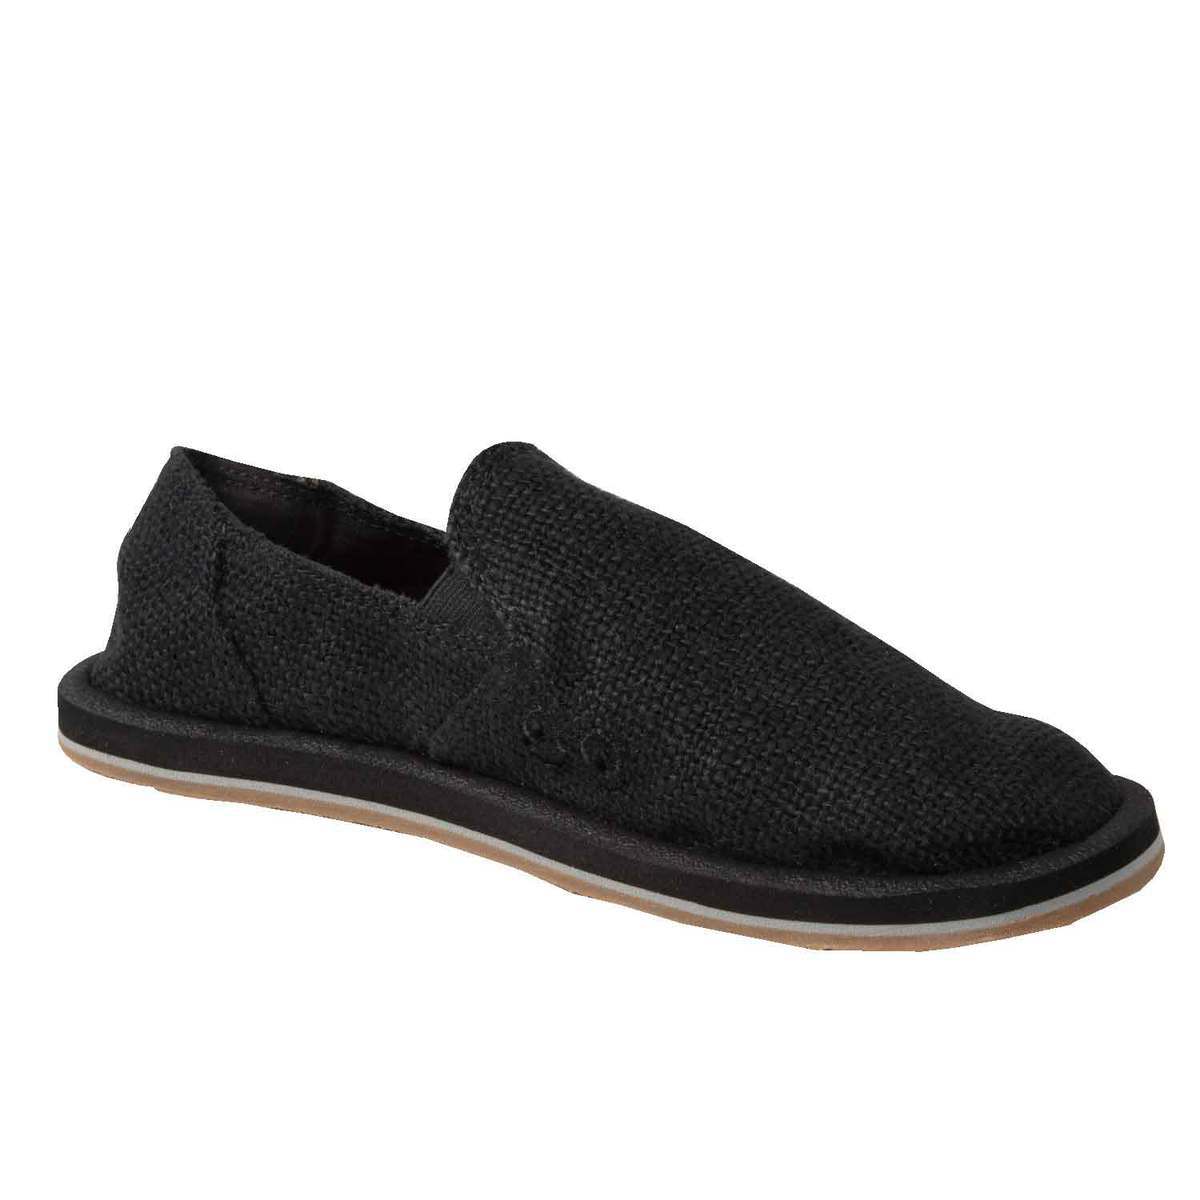 New* Sanuk Donna Sherpa Blanket Black Grey Slip On Shoes Women's Size 7 or  9